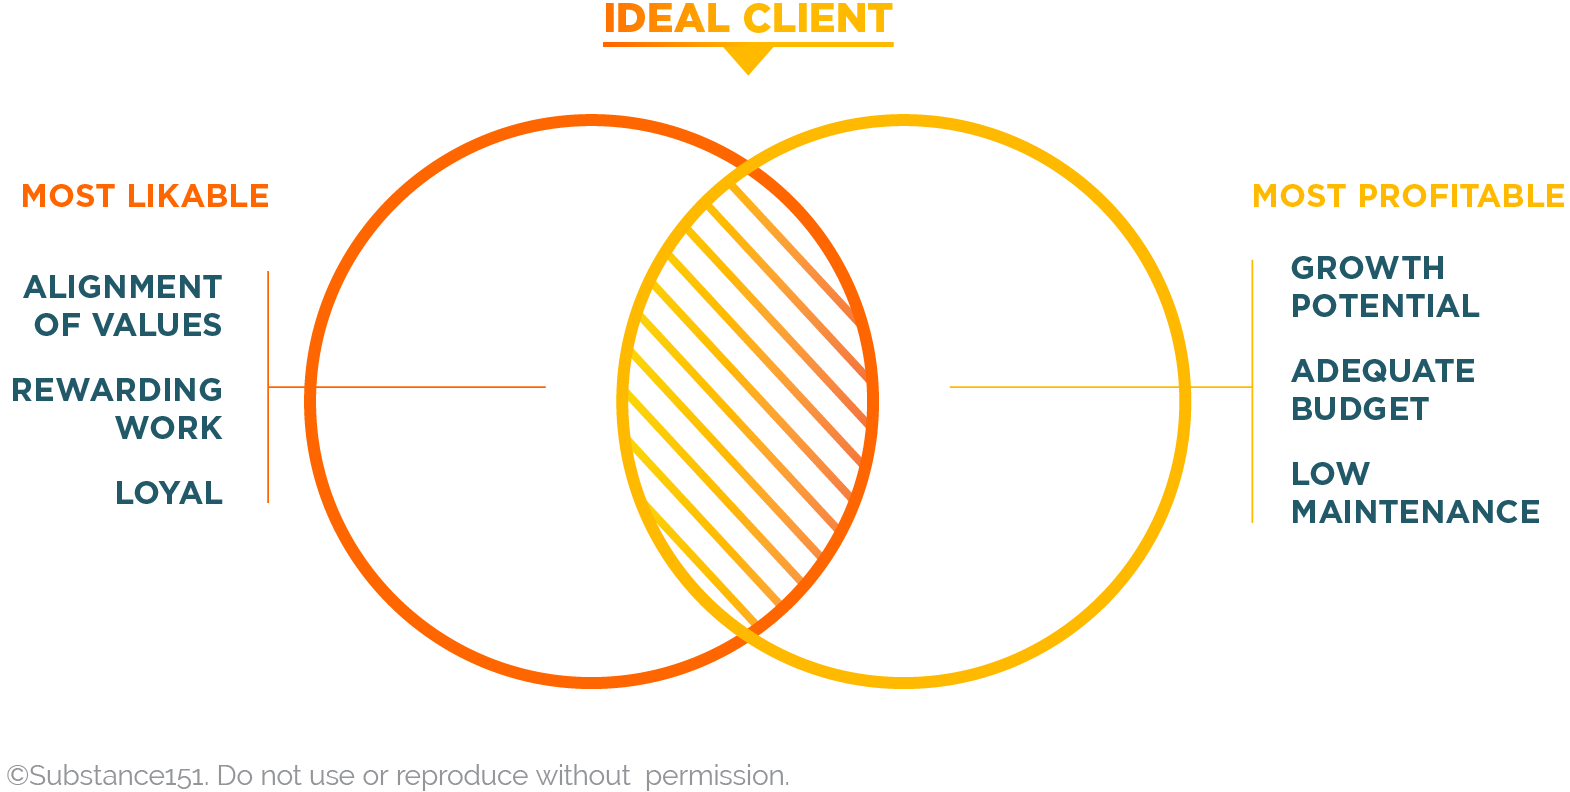 Ideal Client profile ICP